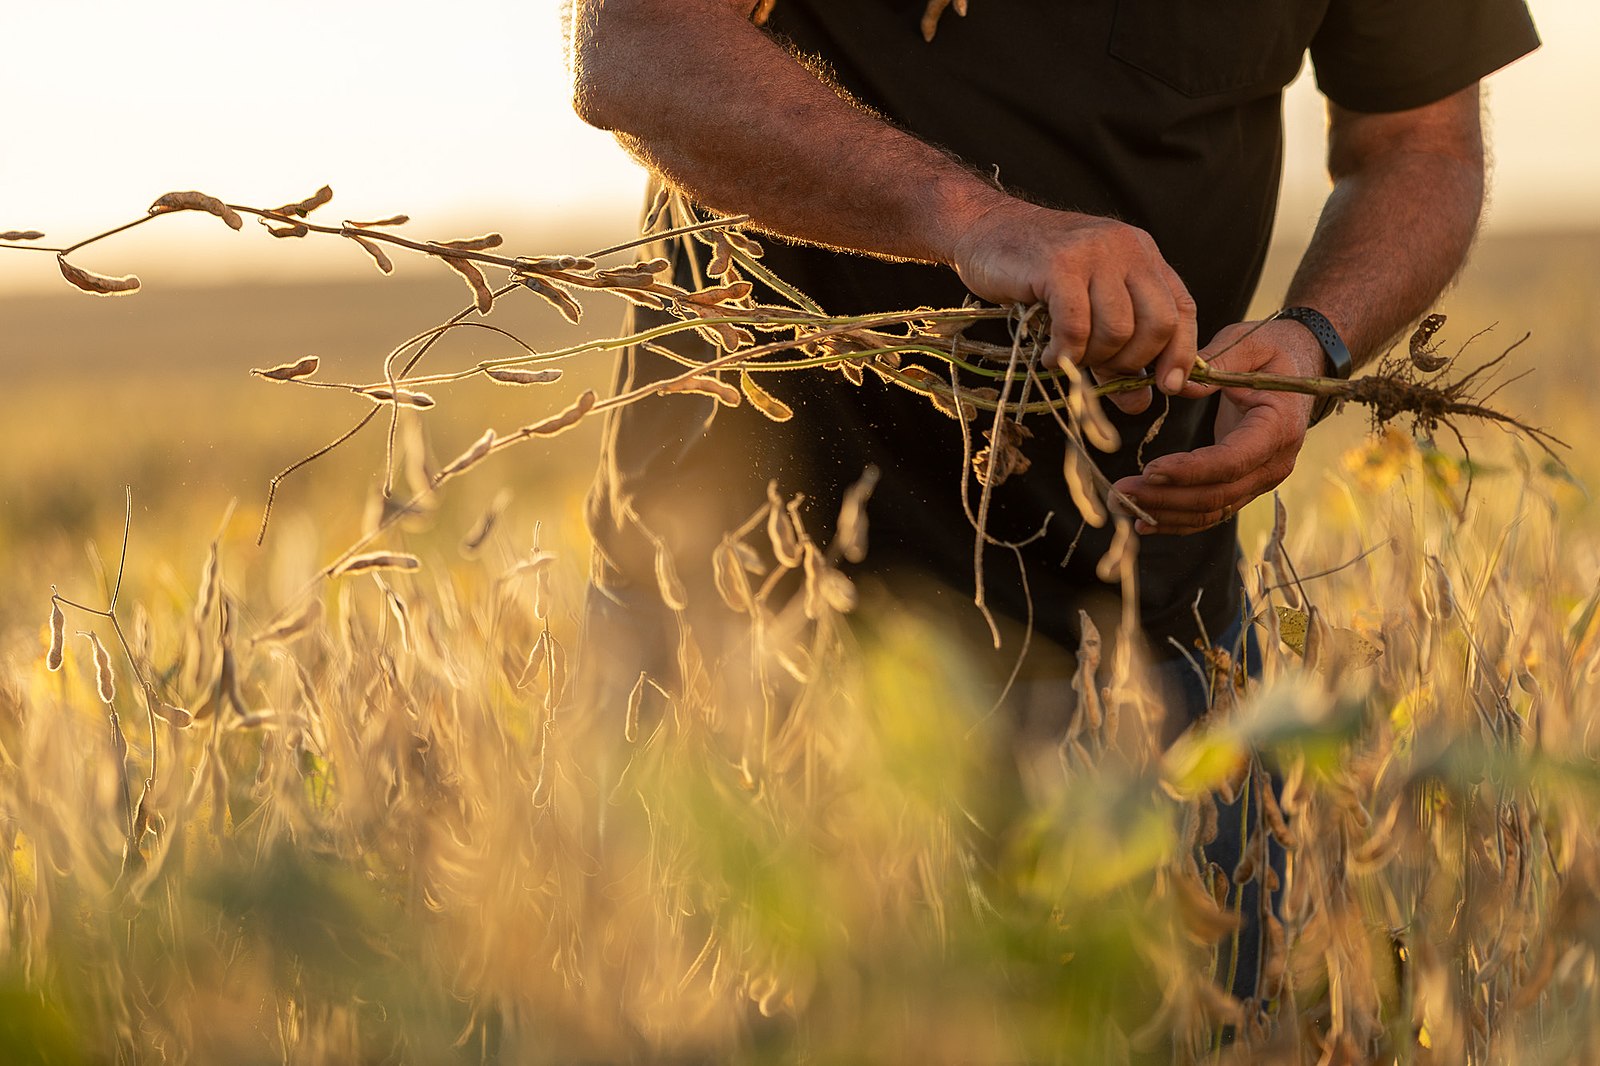 a farmer inspects a soybean plant